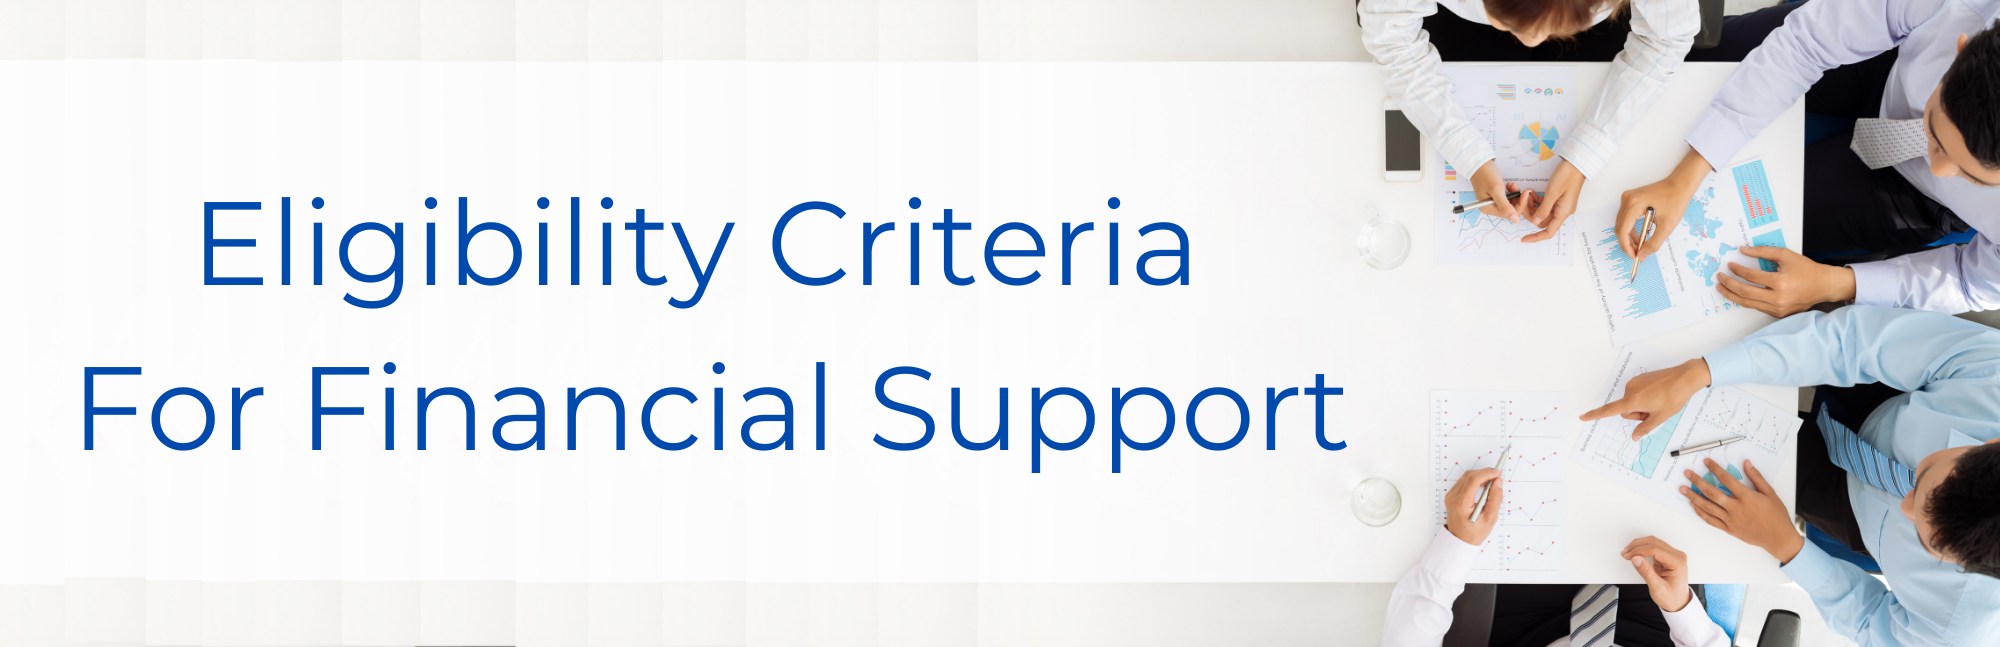 Eligibilty Criteria for Financial Support Header